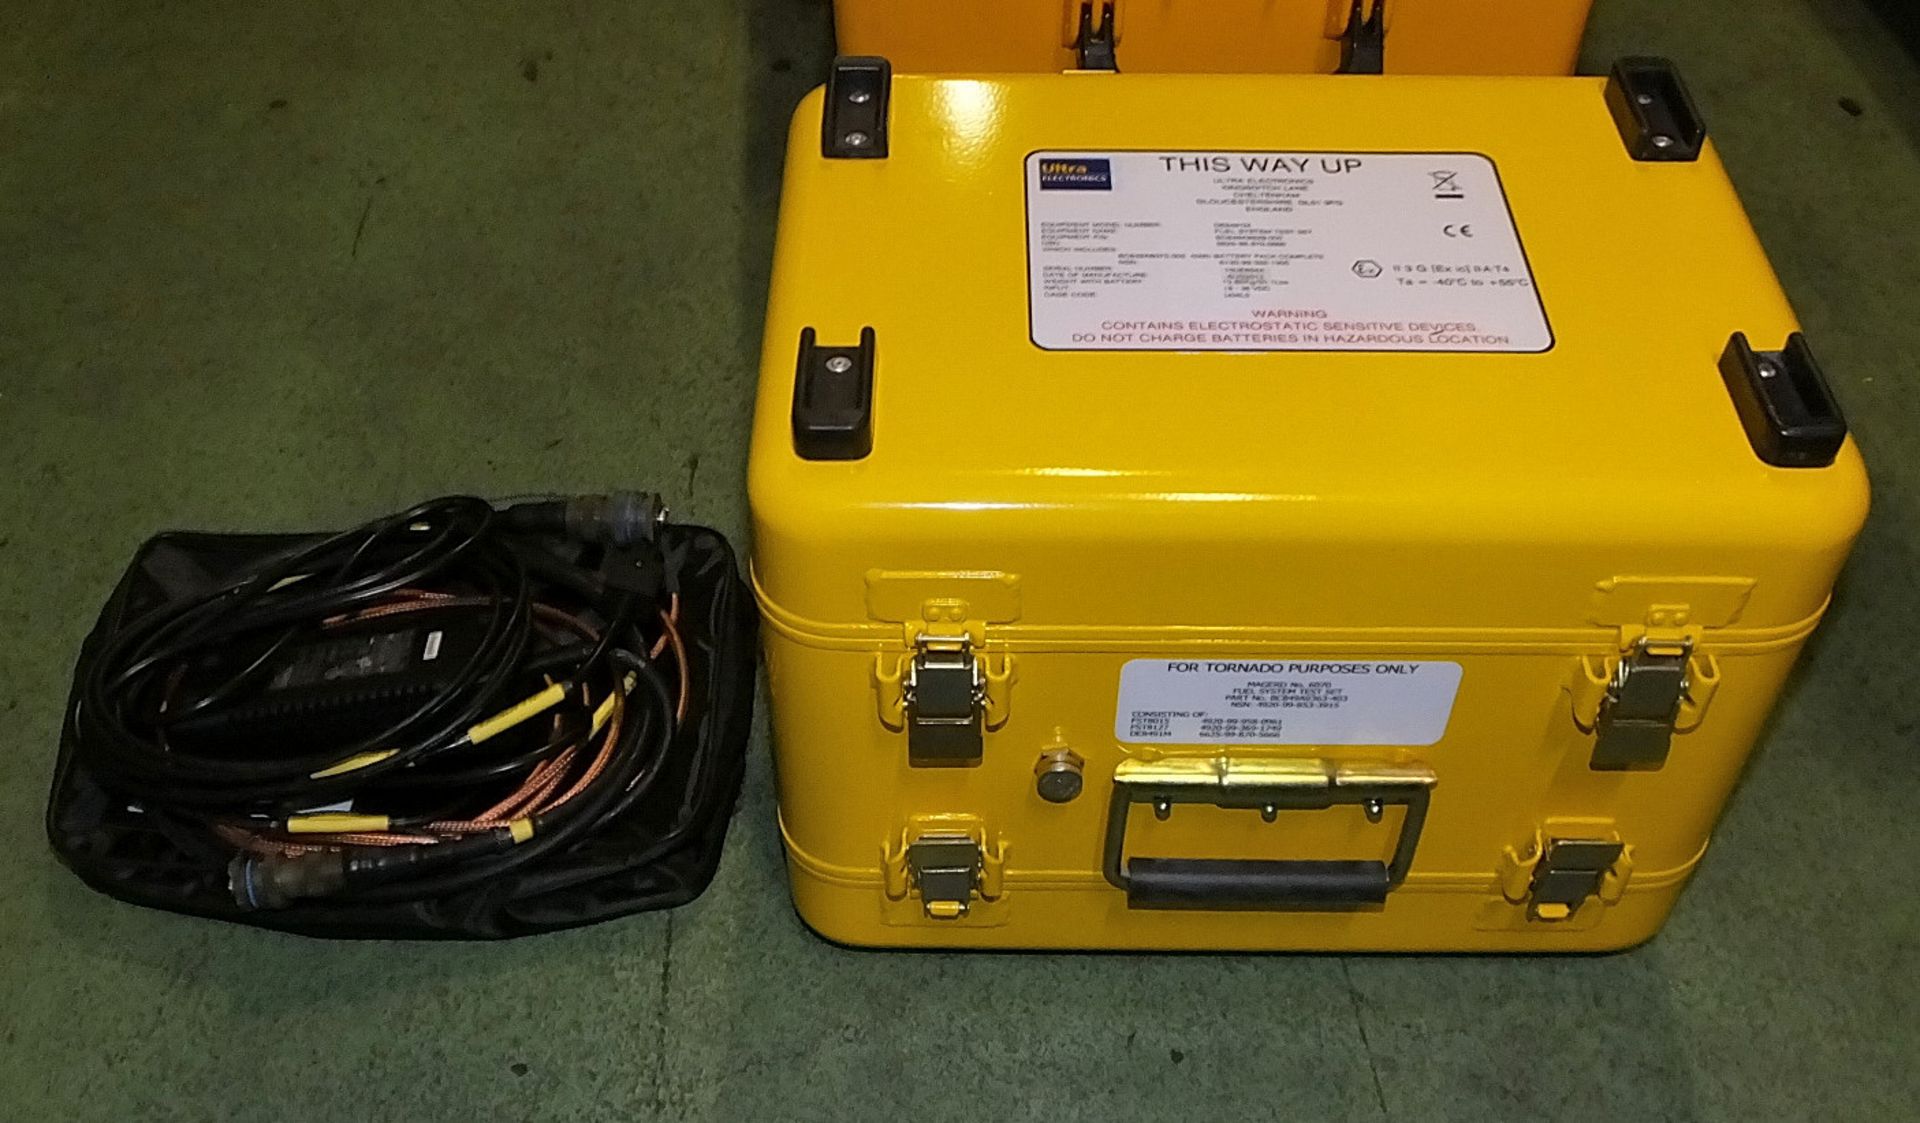 Ultra Electronics DE8491M Fuel System Test Set Kit in heavy duty carry case - Image 3 of 5